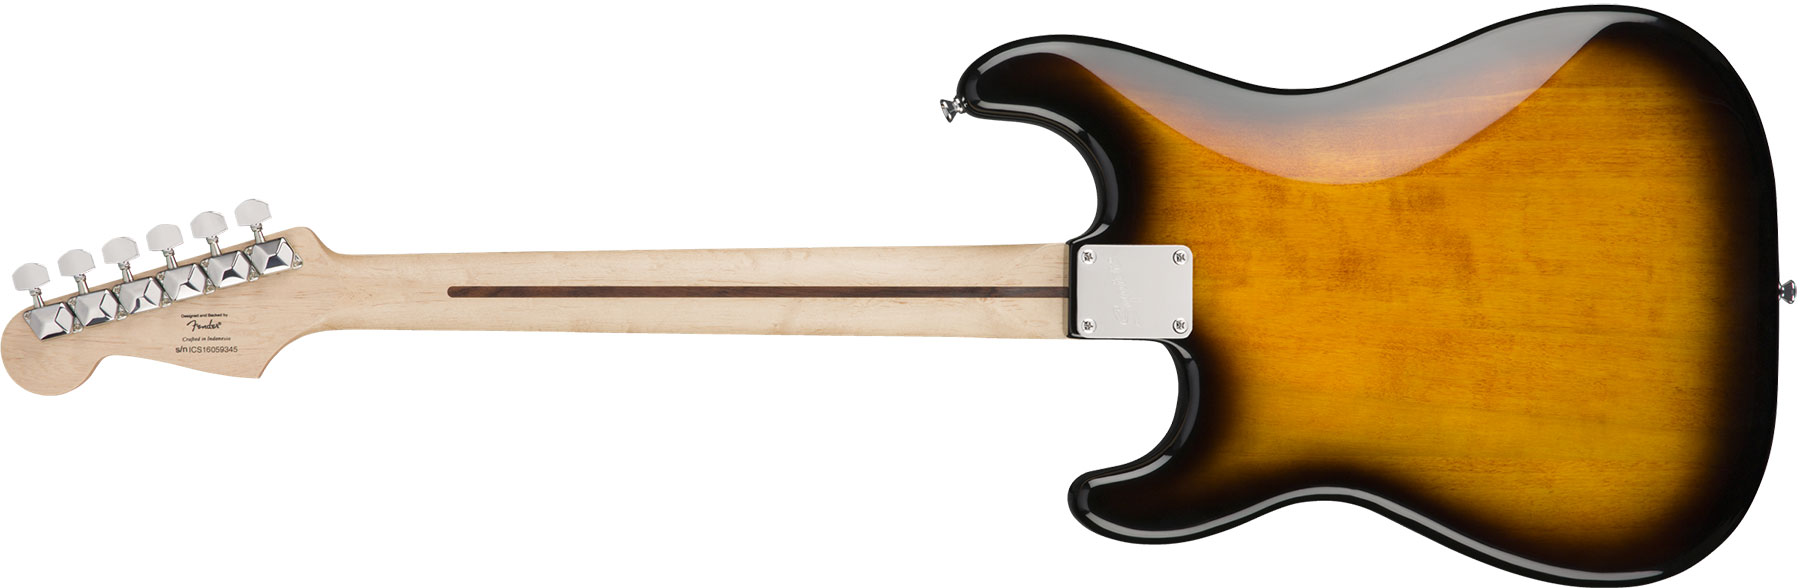 Squier Bullet Stratocaster Ht Sss Rw - Brown Sunburst - E-Gitarre in Str-Form - Variation 1